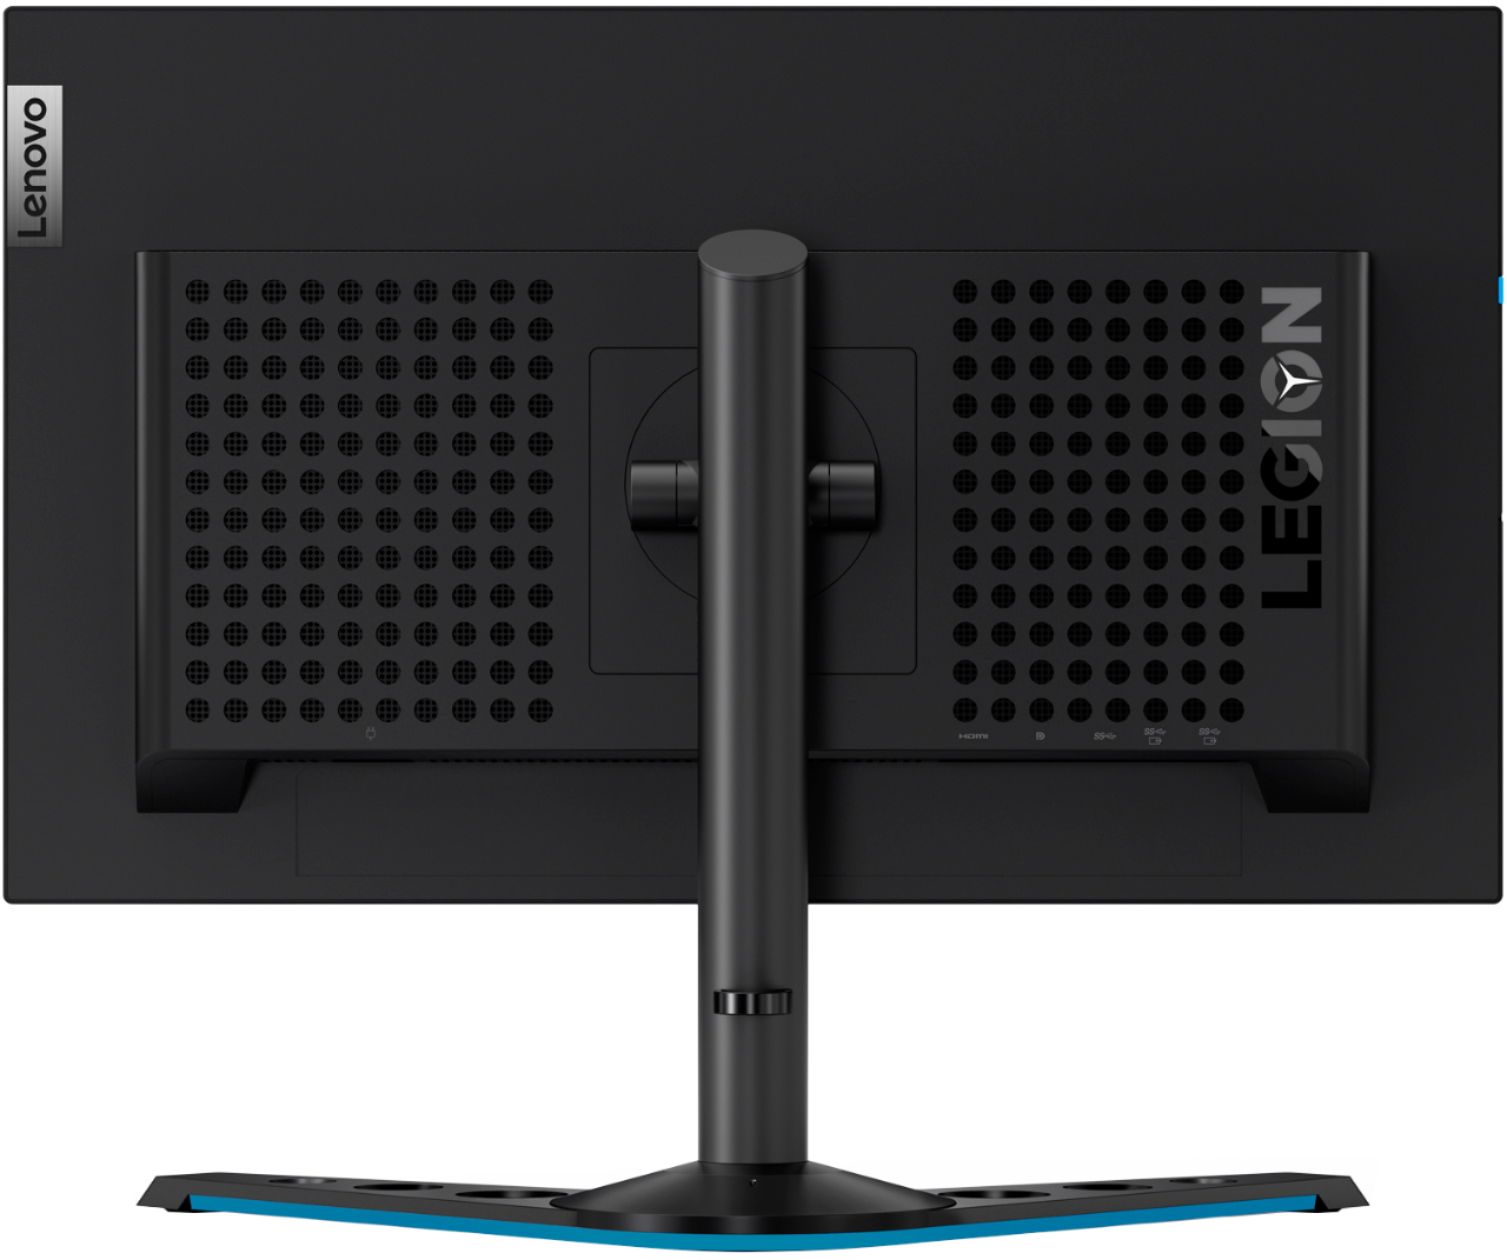 Back View: Lenovo - Legion Y25-25 24.5" IPS LED FHD FreeSync and G-SYNC Compatible Gaming Monitor (DisplayPort, HDMI, USB) - Raven Black